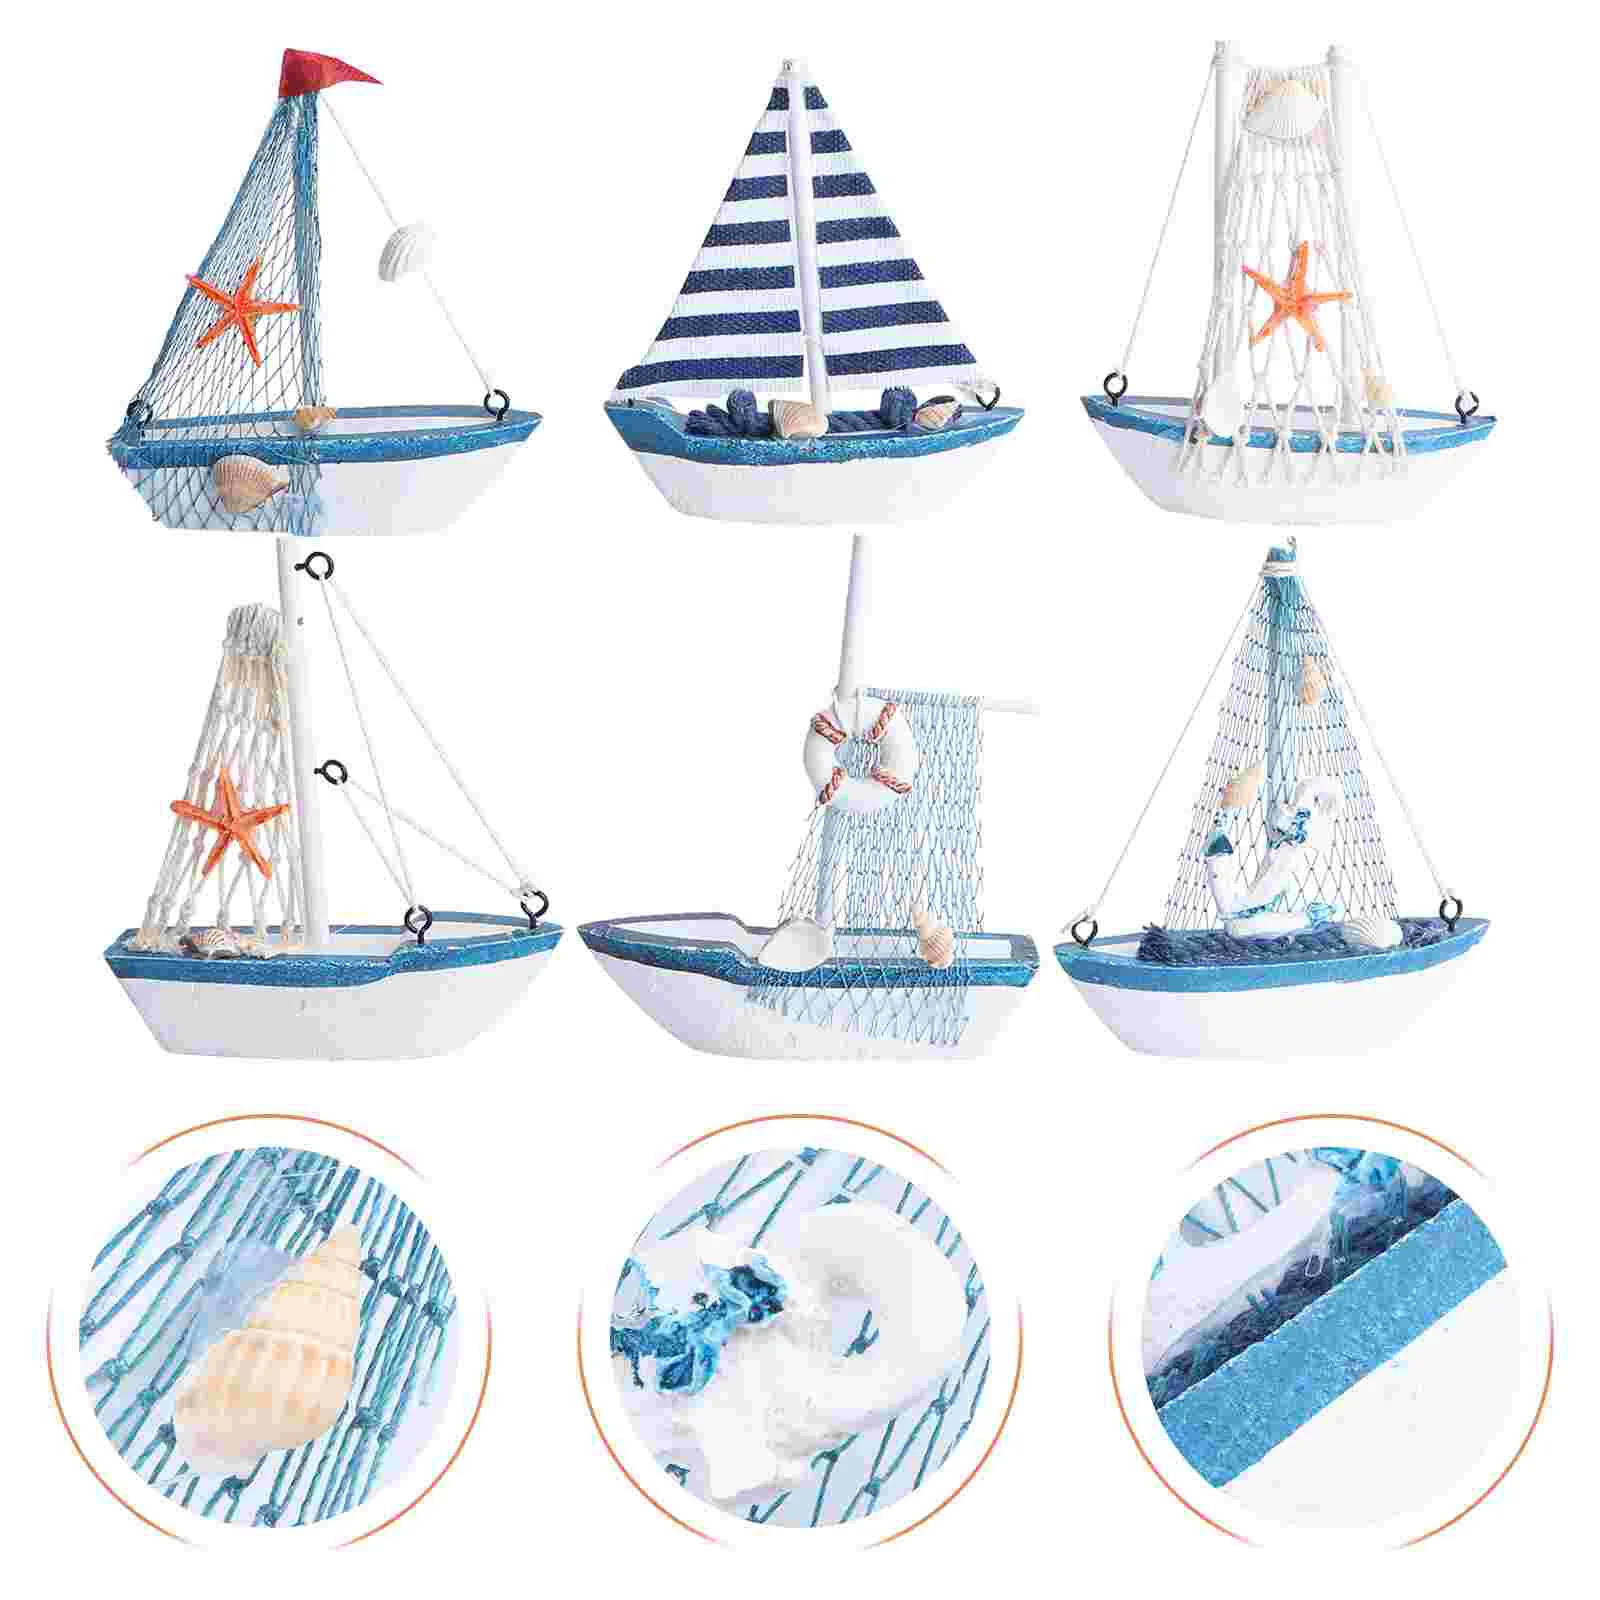 

6 Pcs Boat Model Blue Table Decor Mediterranean Style Sailboat Ship Desktop Ornament Pirate MDF Seaside